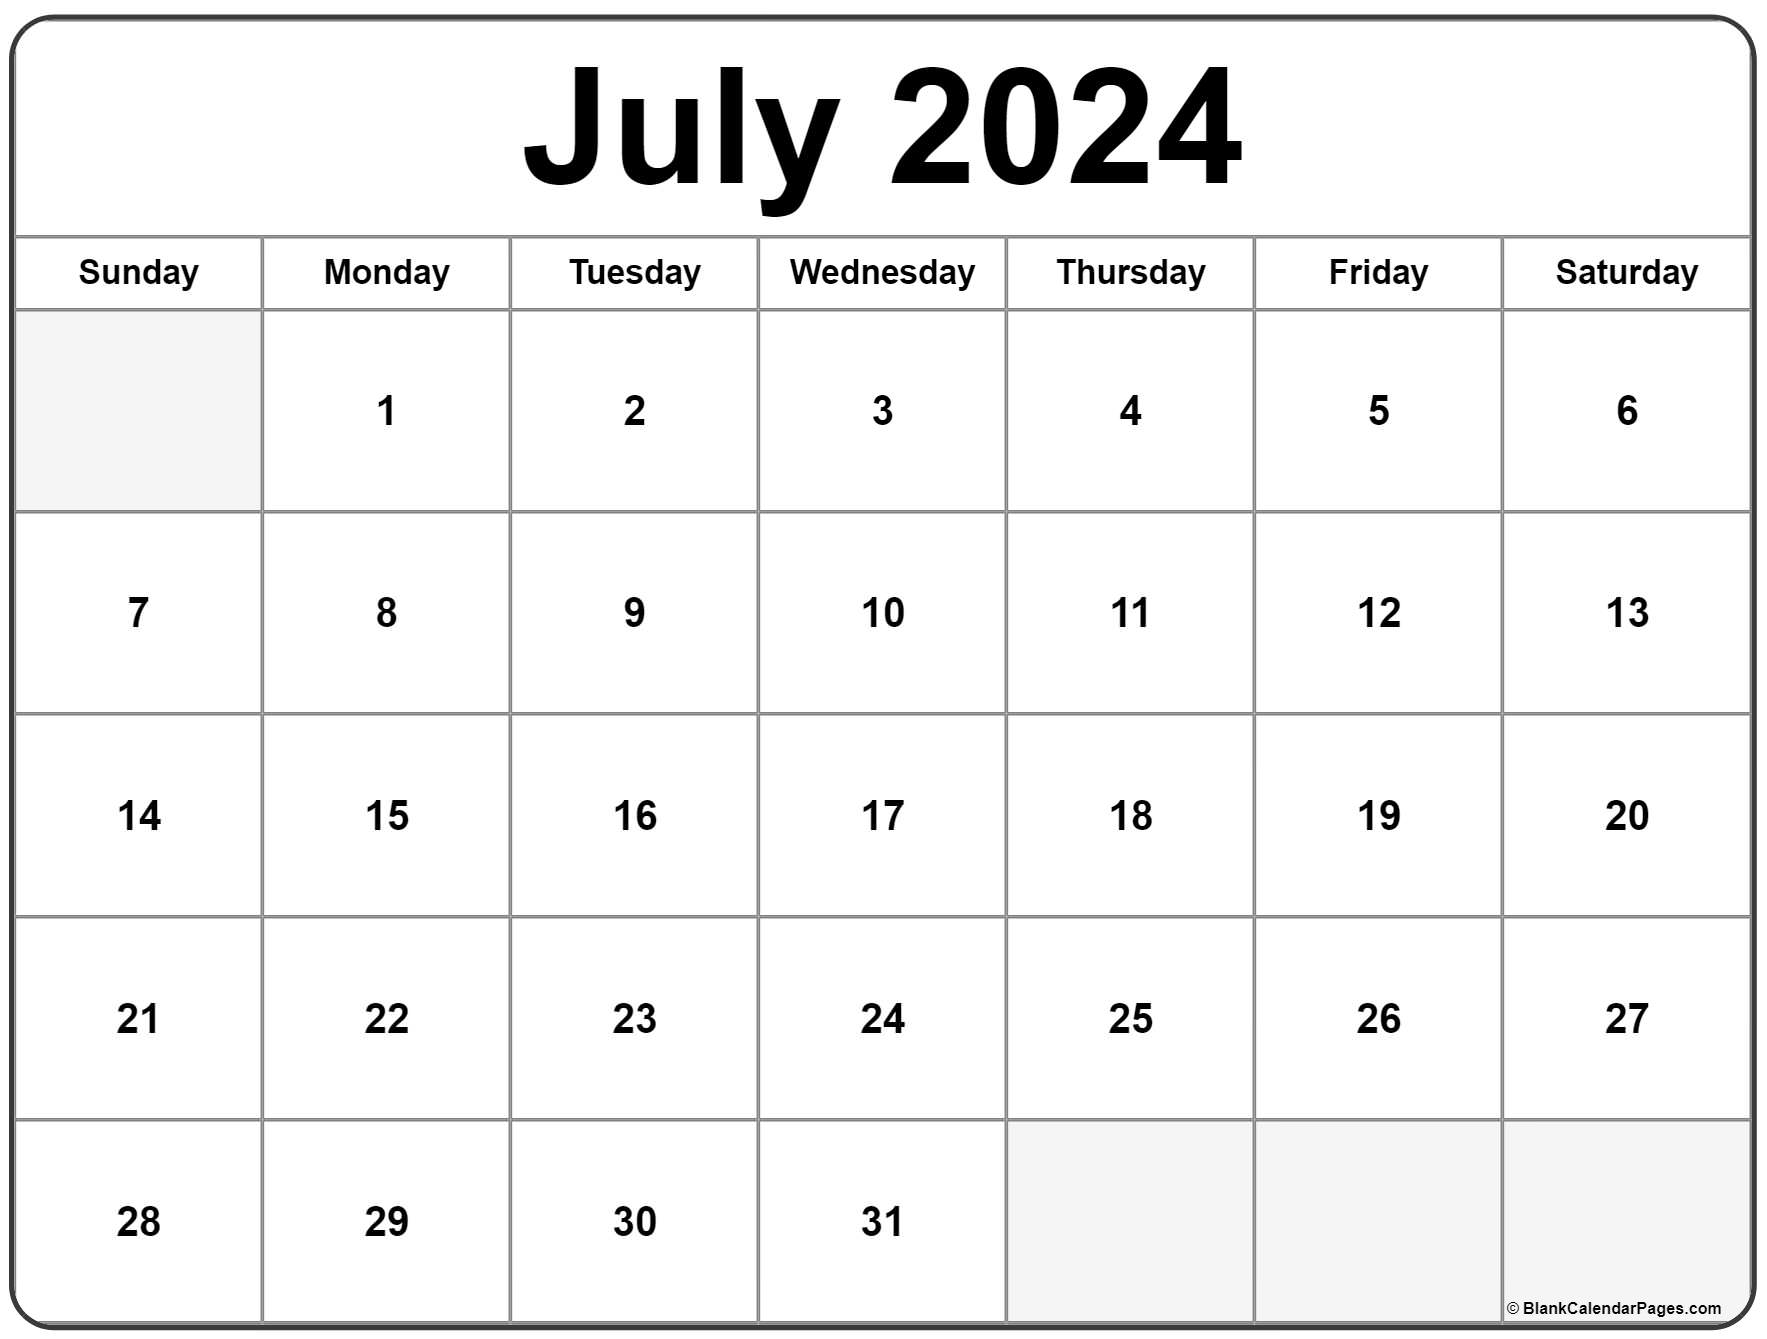 July 2024 calendar | free printable calendar